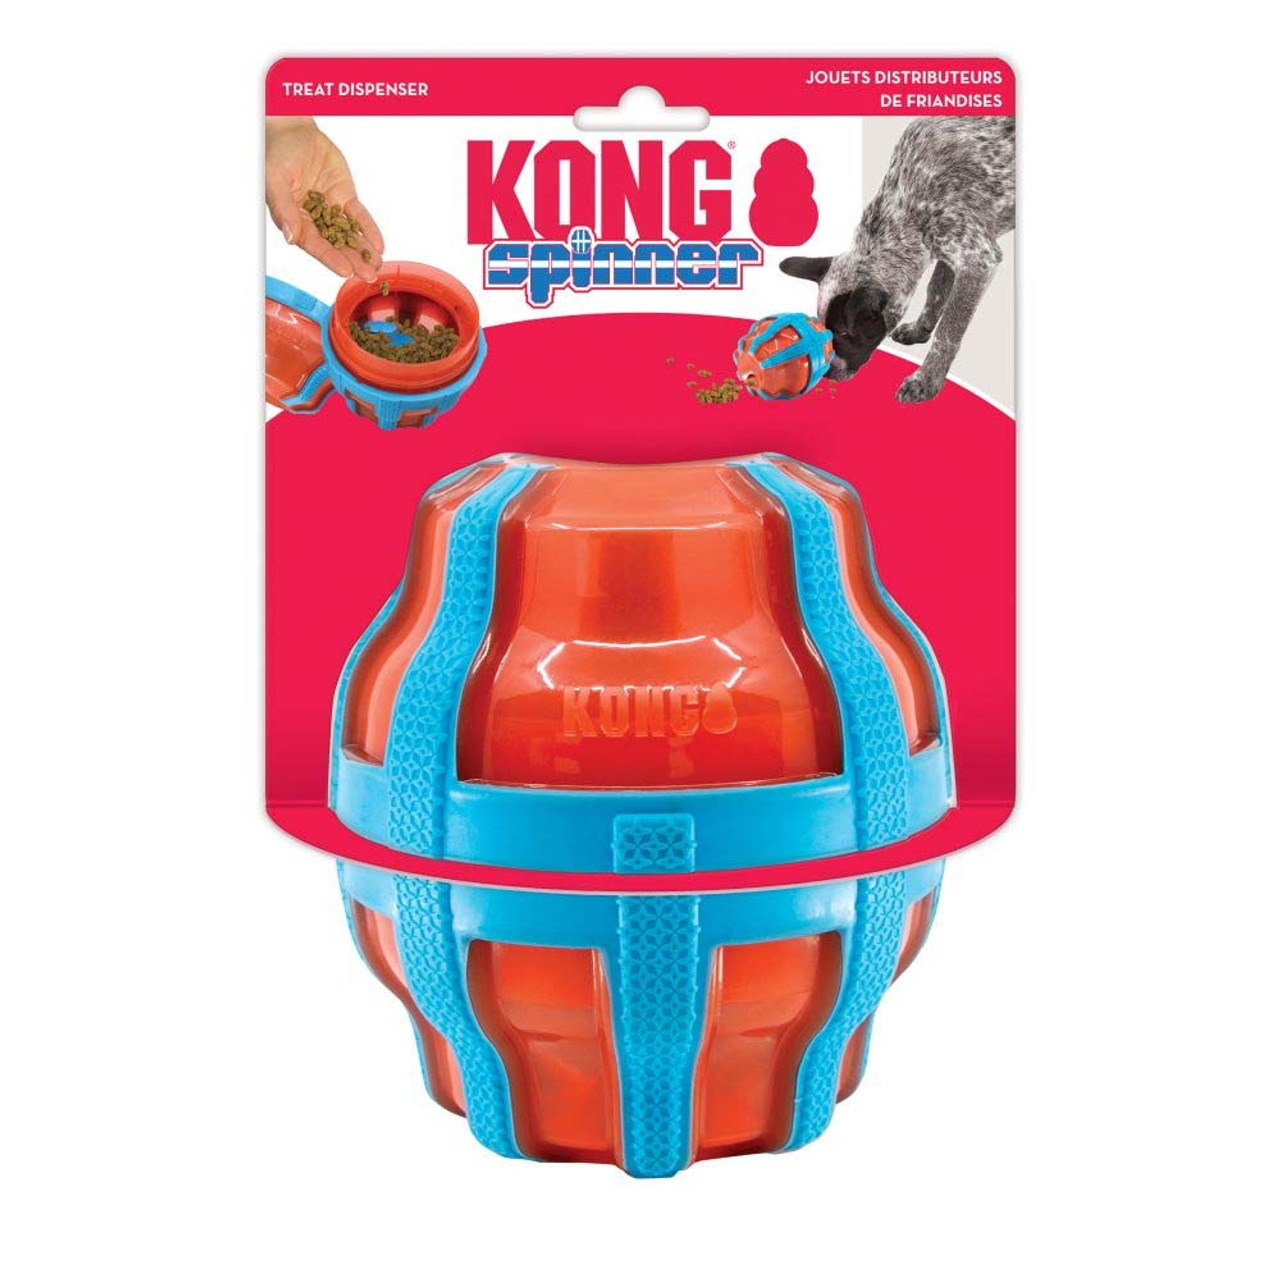 KONG Gyro - Dog Toy Treat Dispenser